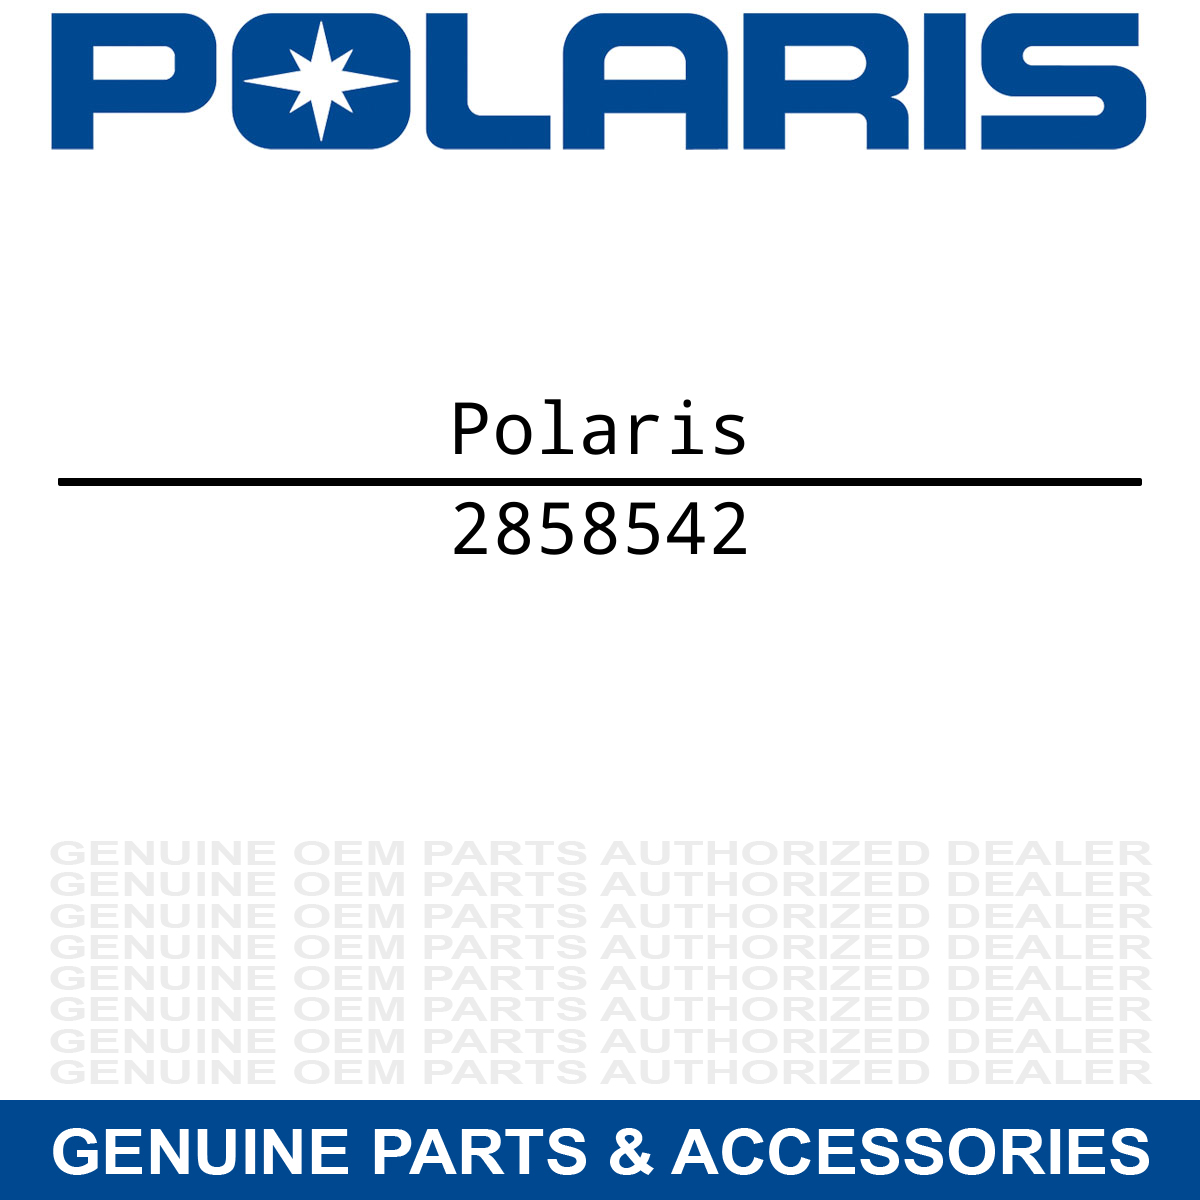 Polaris 2858542 G2 Heavy Duty Wear Bar Replacement Kit